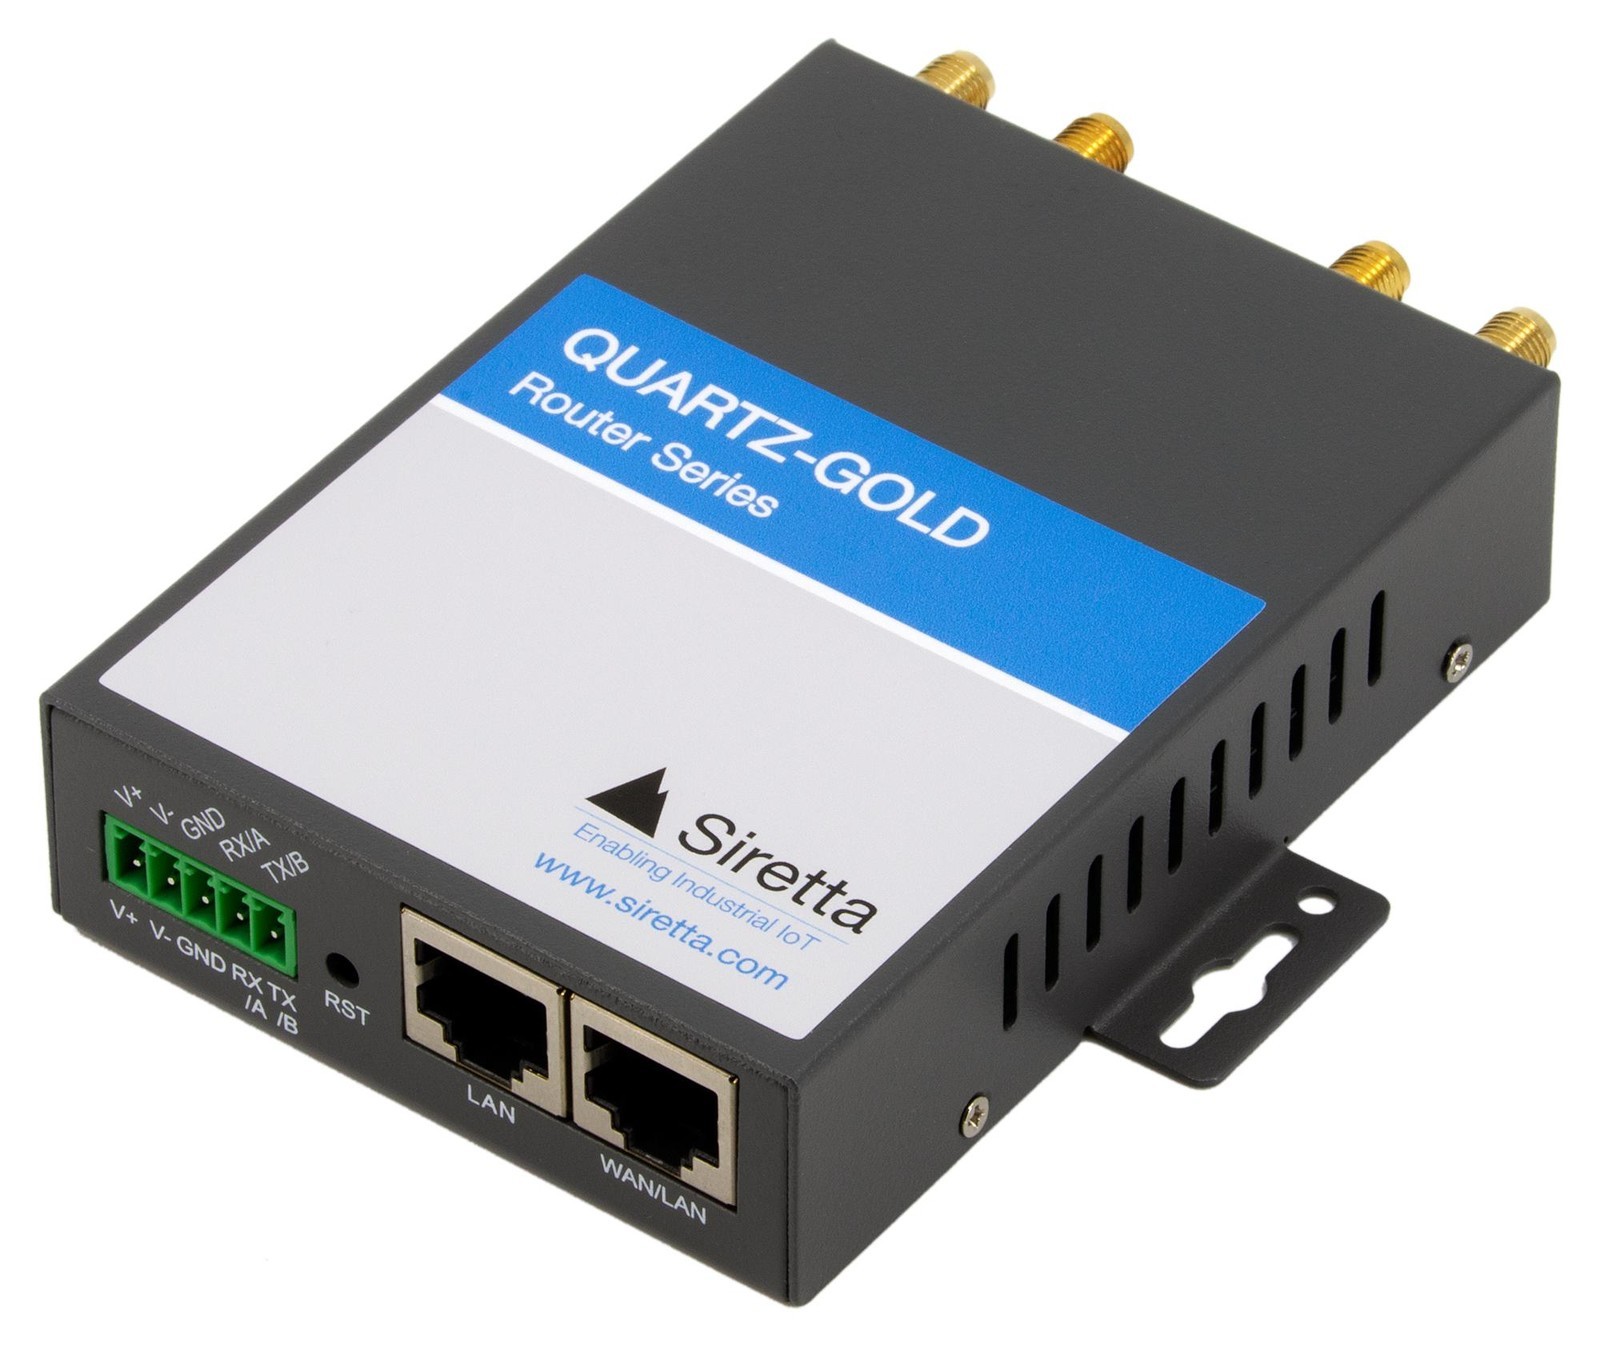 Siretta Quartz-Gold-Gw21-Lte4 (Eu) + Accessories Gigabit Enet Small Footprint Lte Router